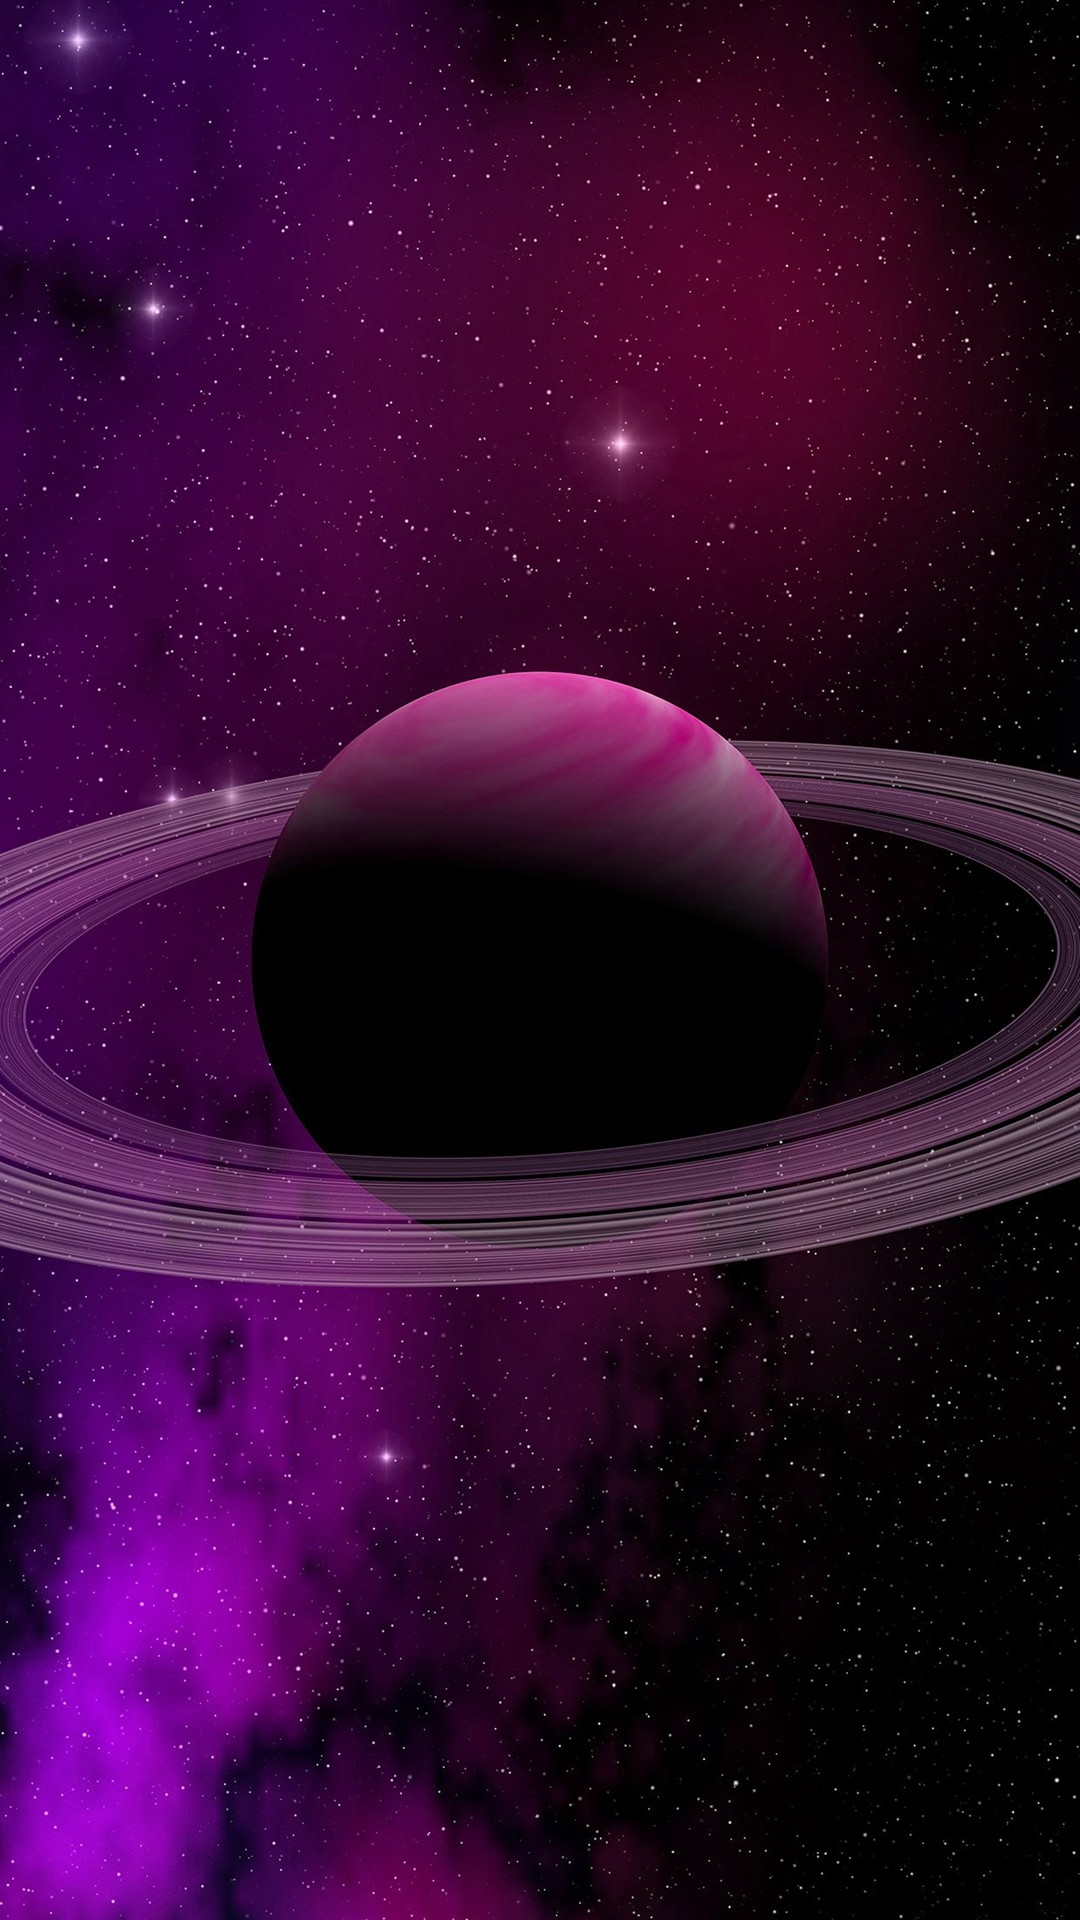 Space Planet Saturn Star Art Illustration Purple #iPhone #wallpaper